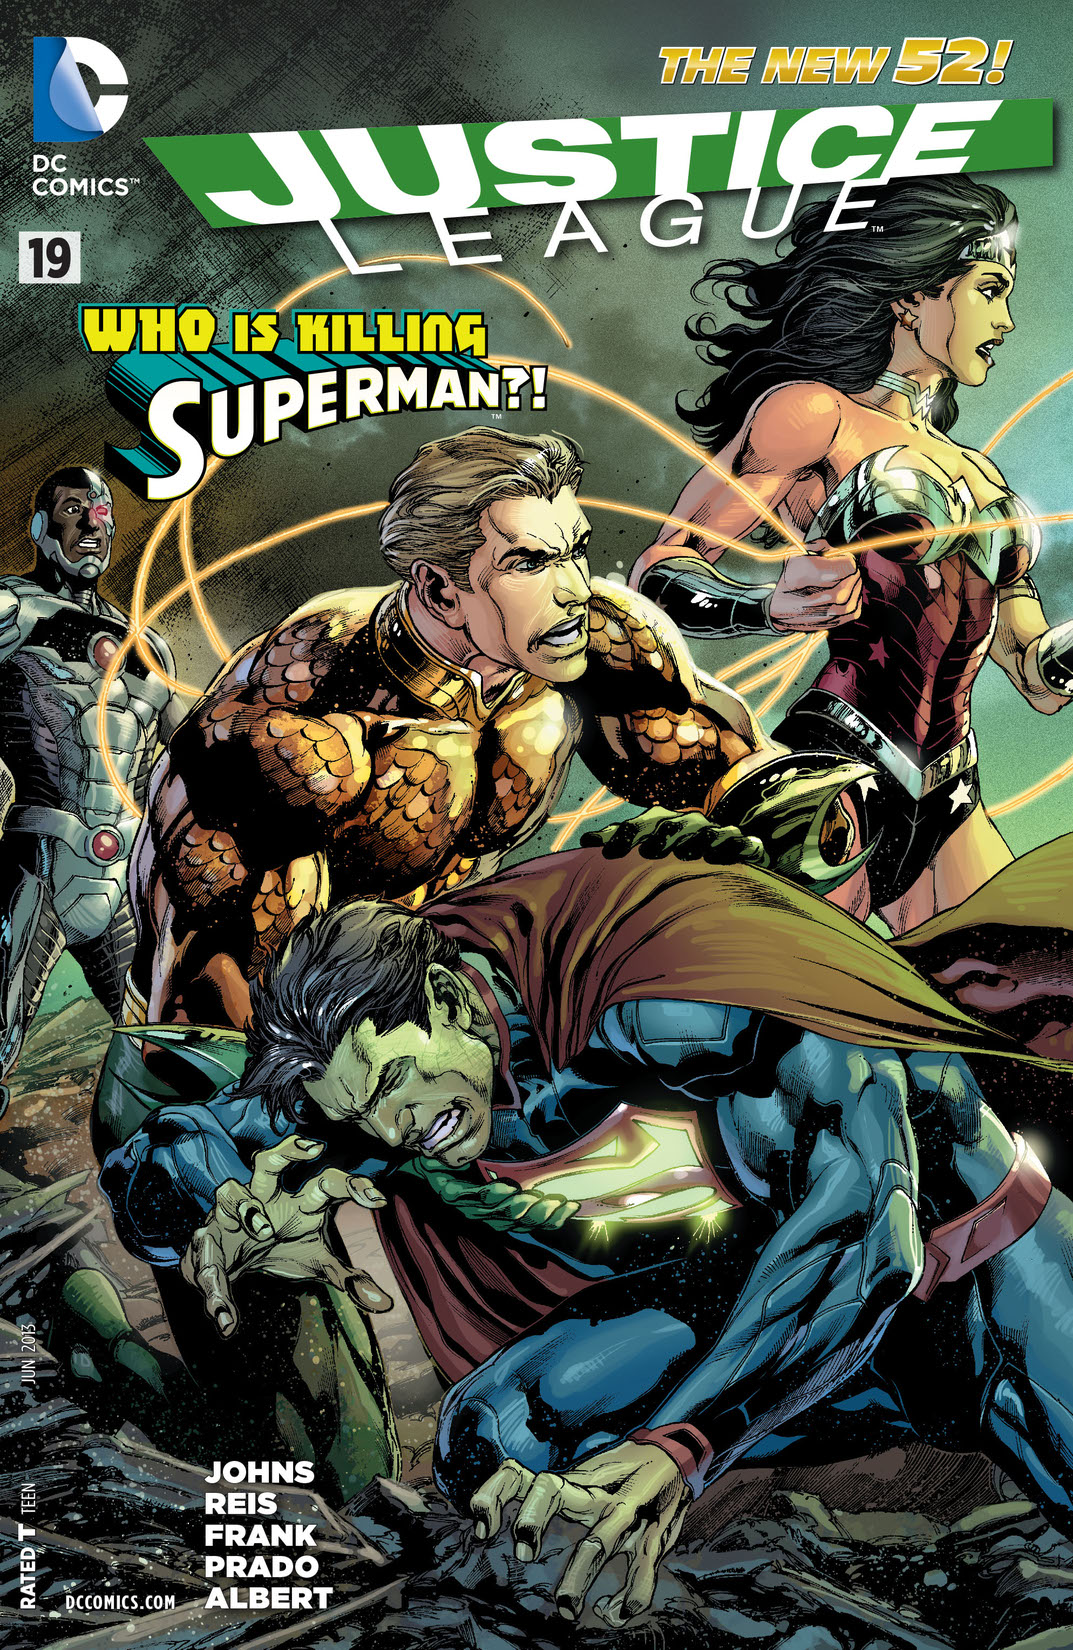 Justice League (2011-) #19 preview images